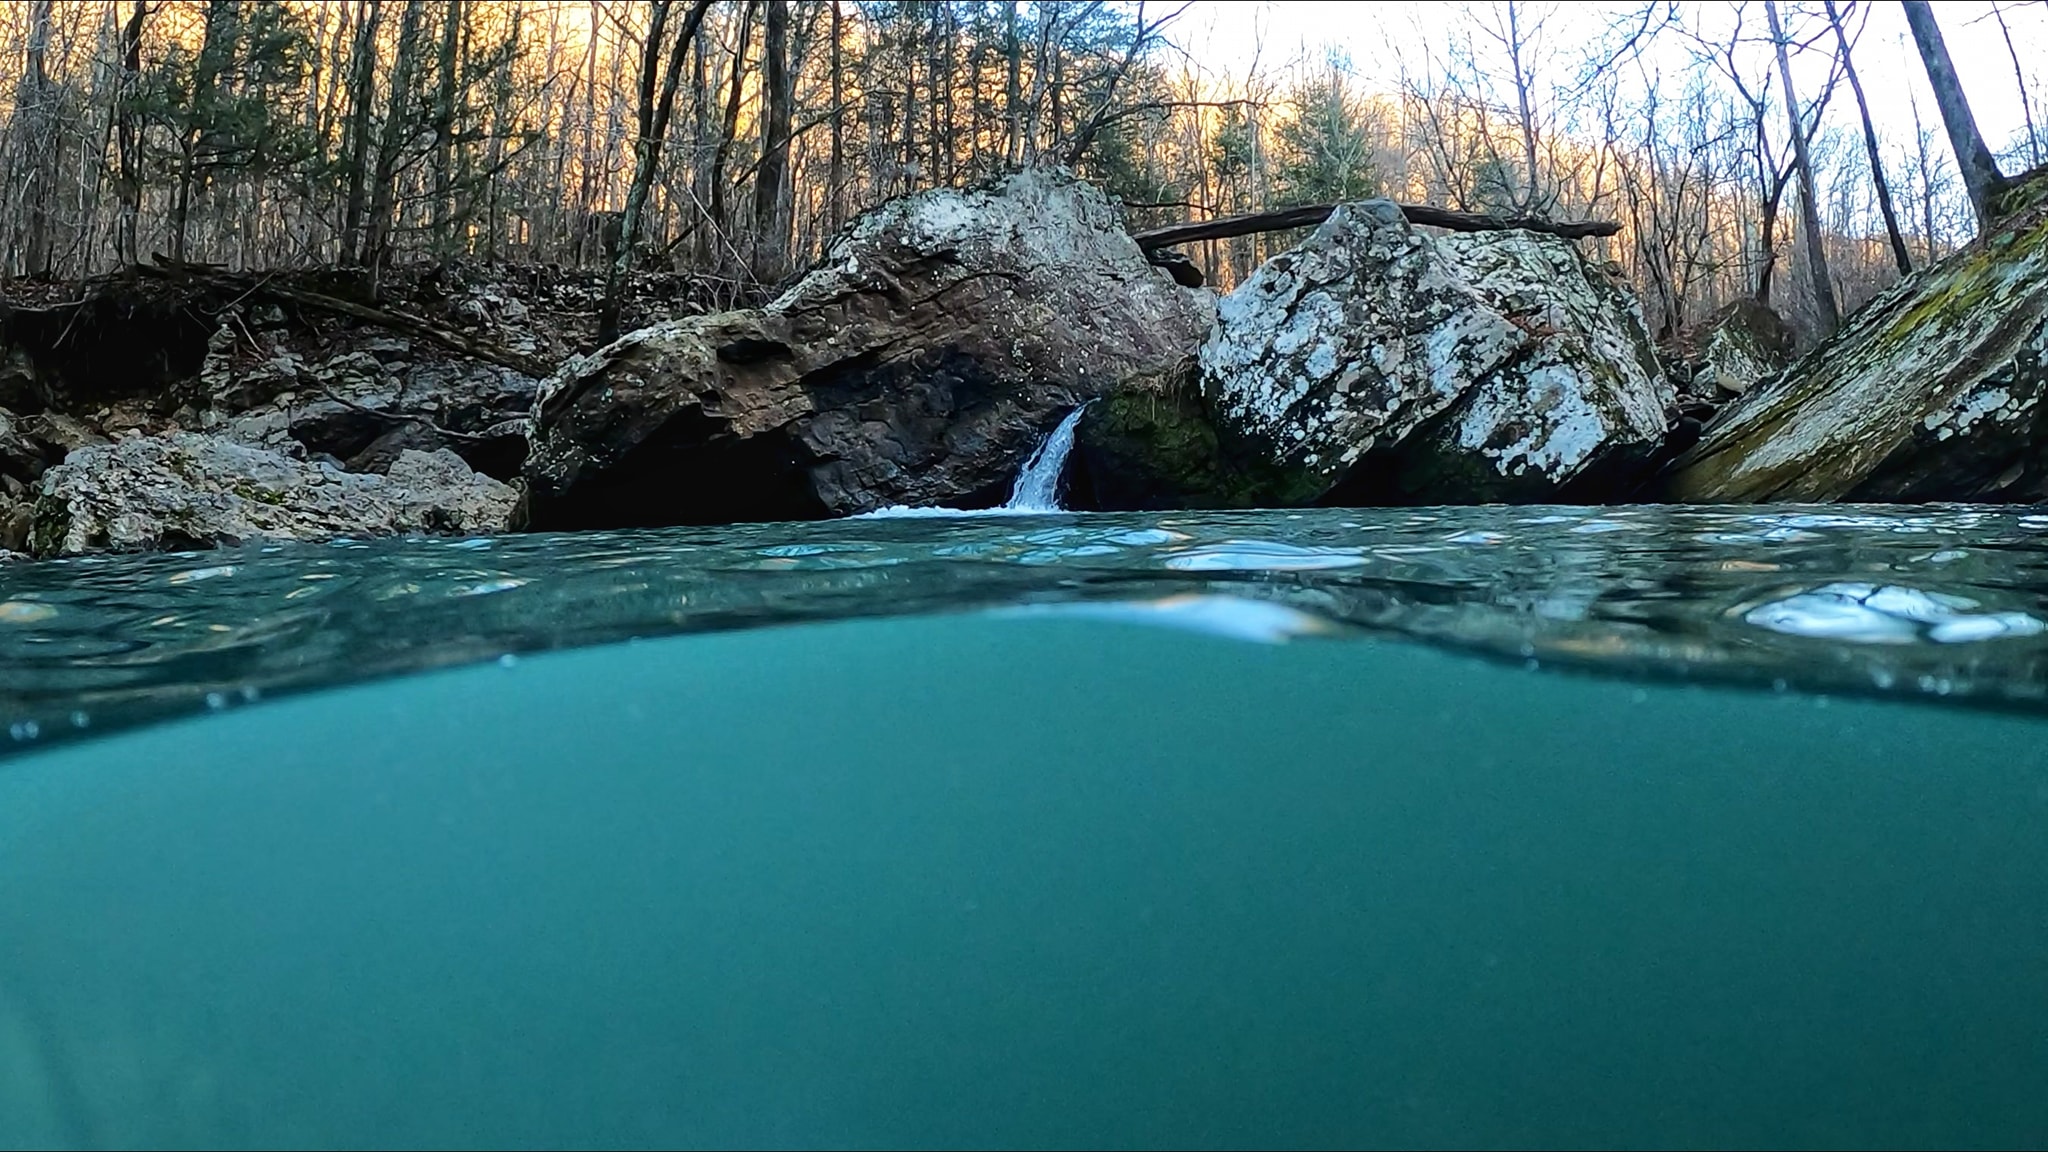 Some creek shots from yesterday exploring Newton County – Arkansas